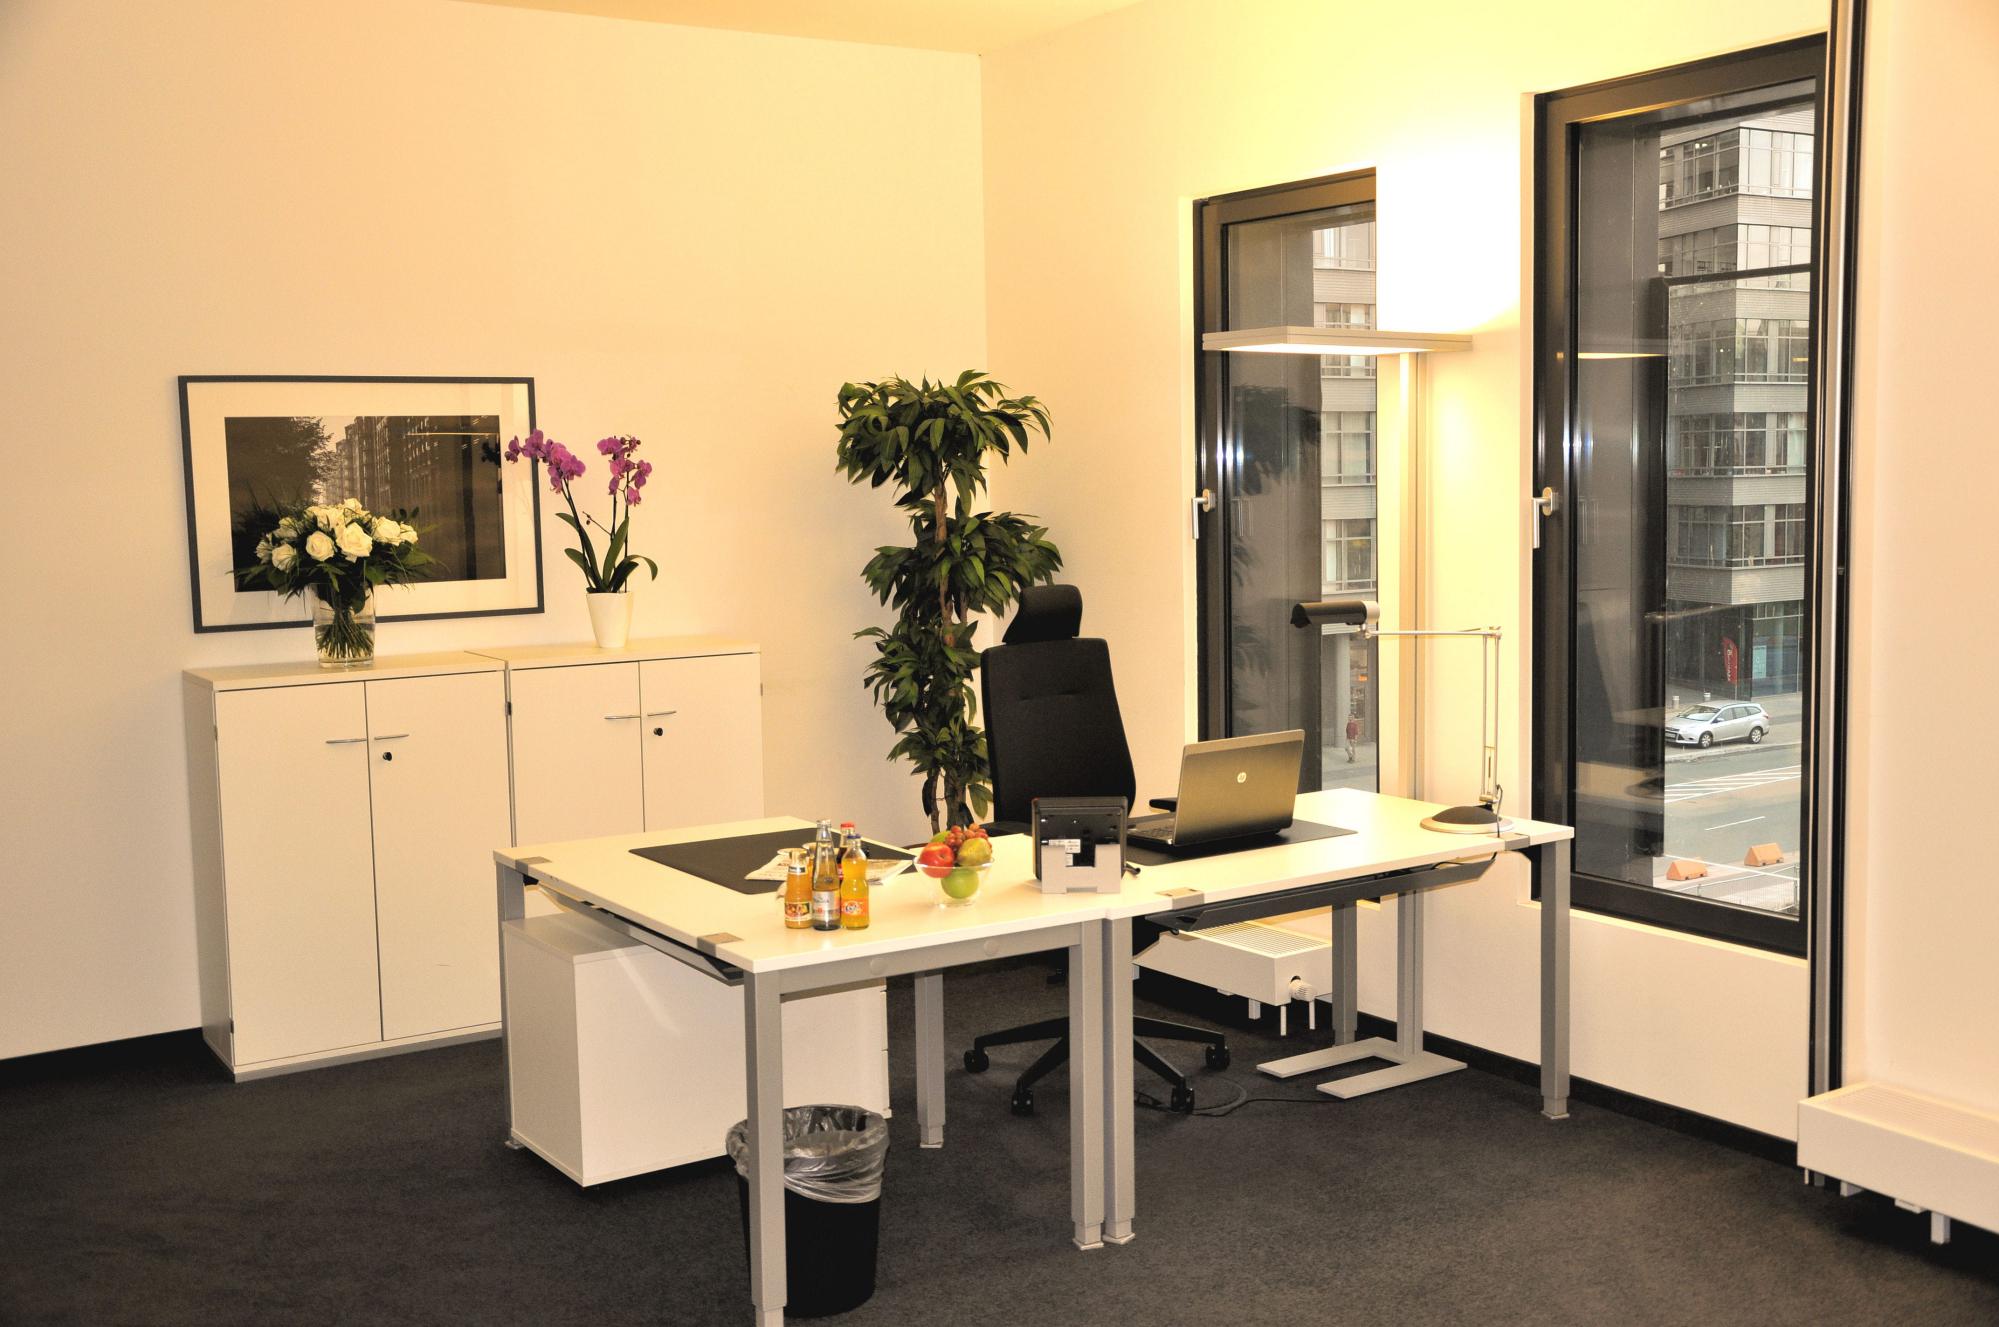 Office Space For Rent Uberseeallee 1 Hamburg